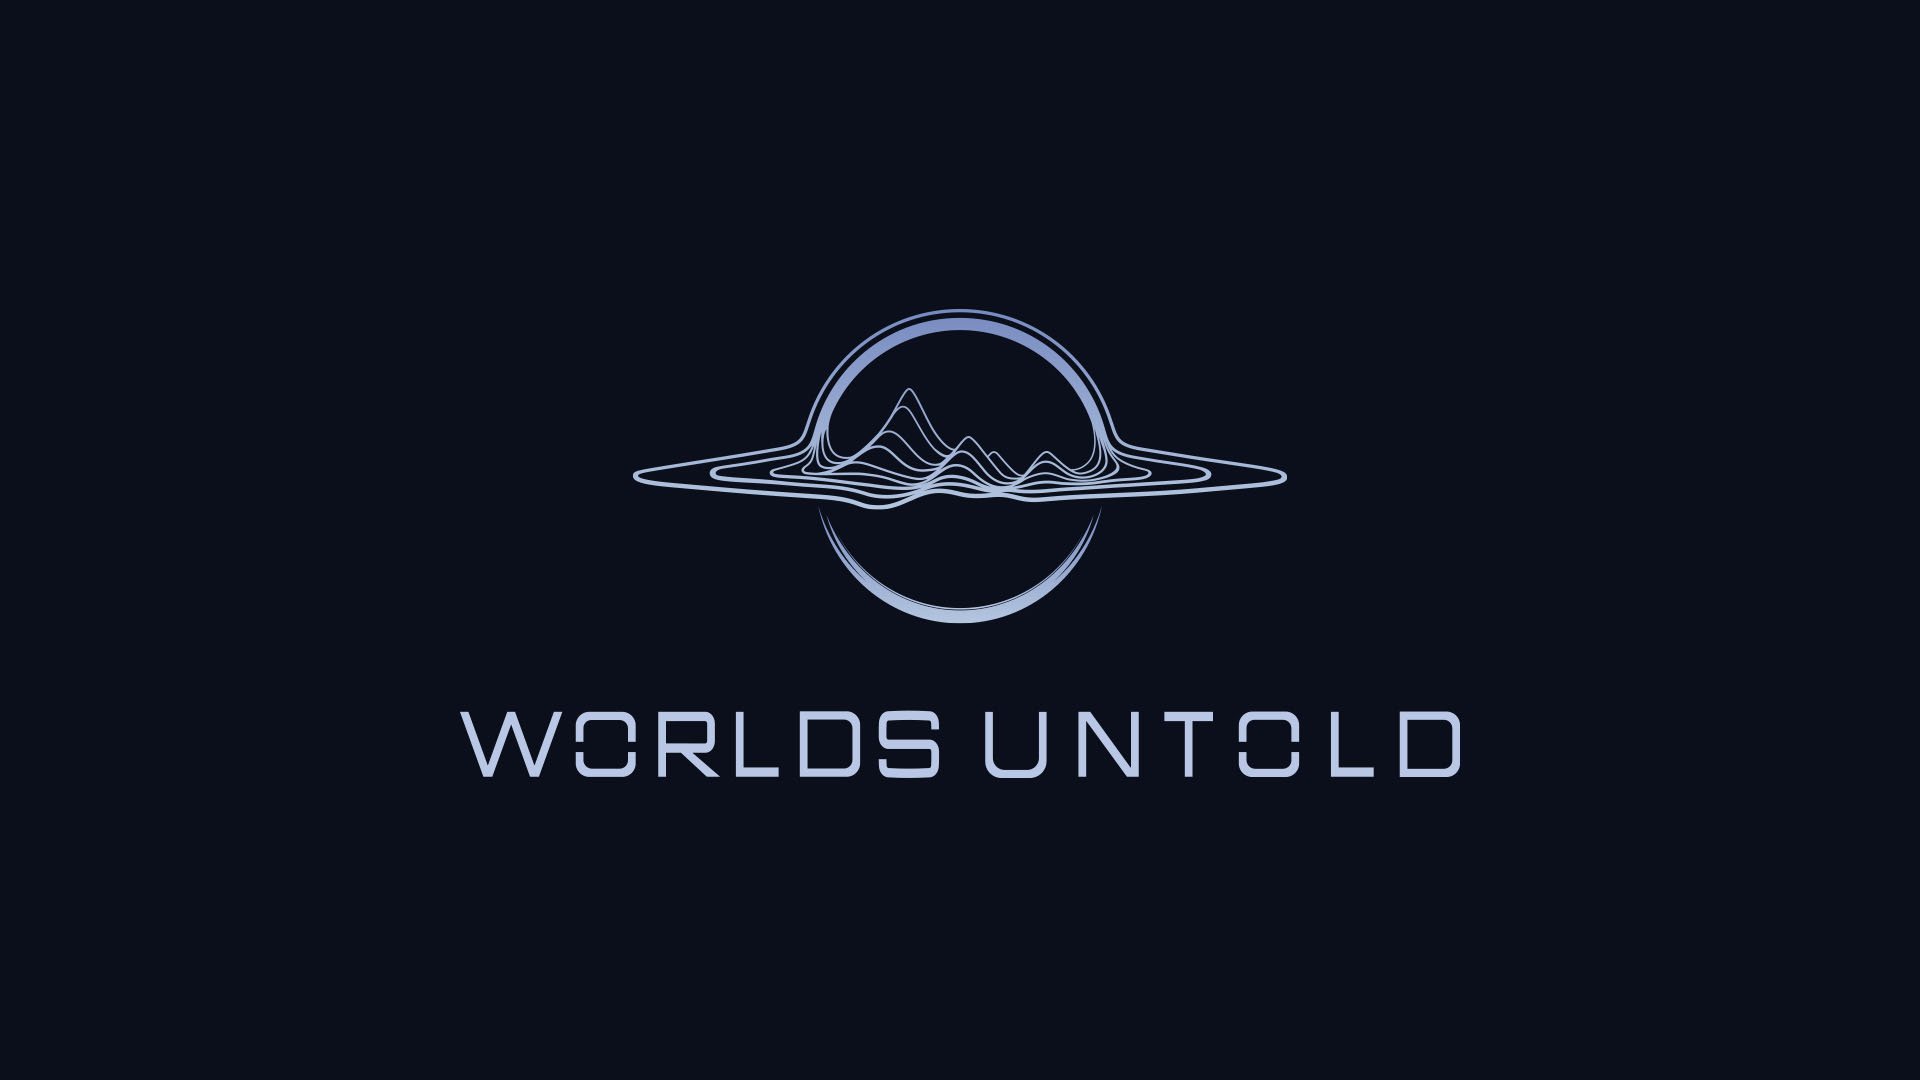 NetEase Games fonde le studio Worlds Untold avec Mac Walters (Mass Effect) à la barre